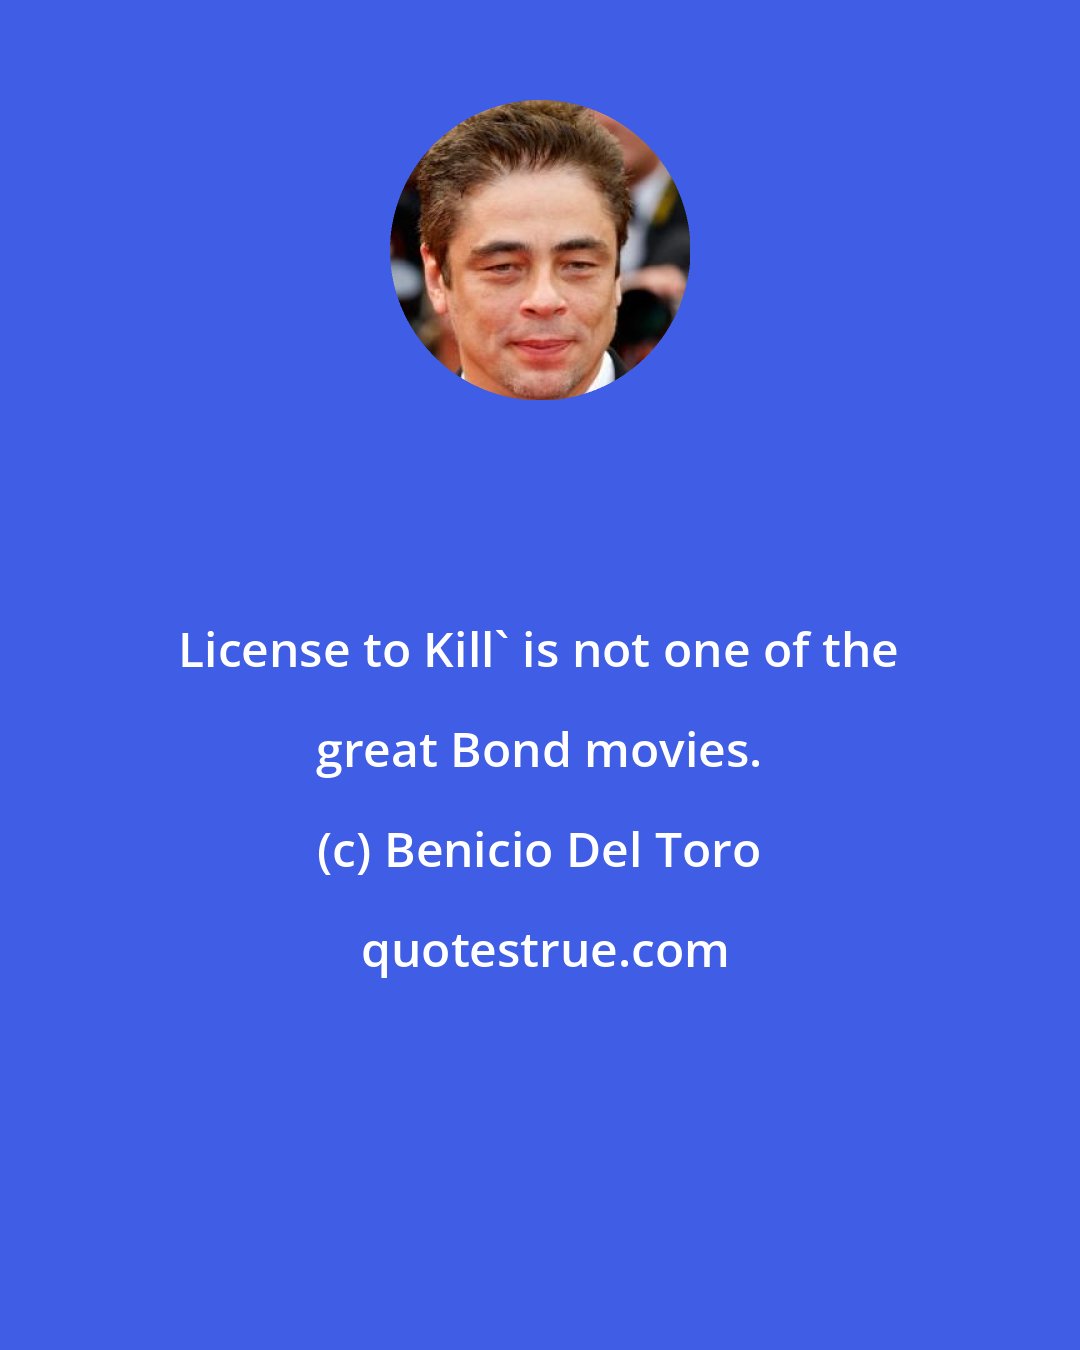 Benicio Del Toro: License to Kill' is not one of the great Bond movies.